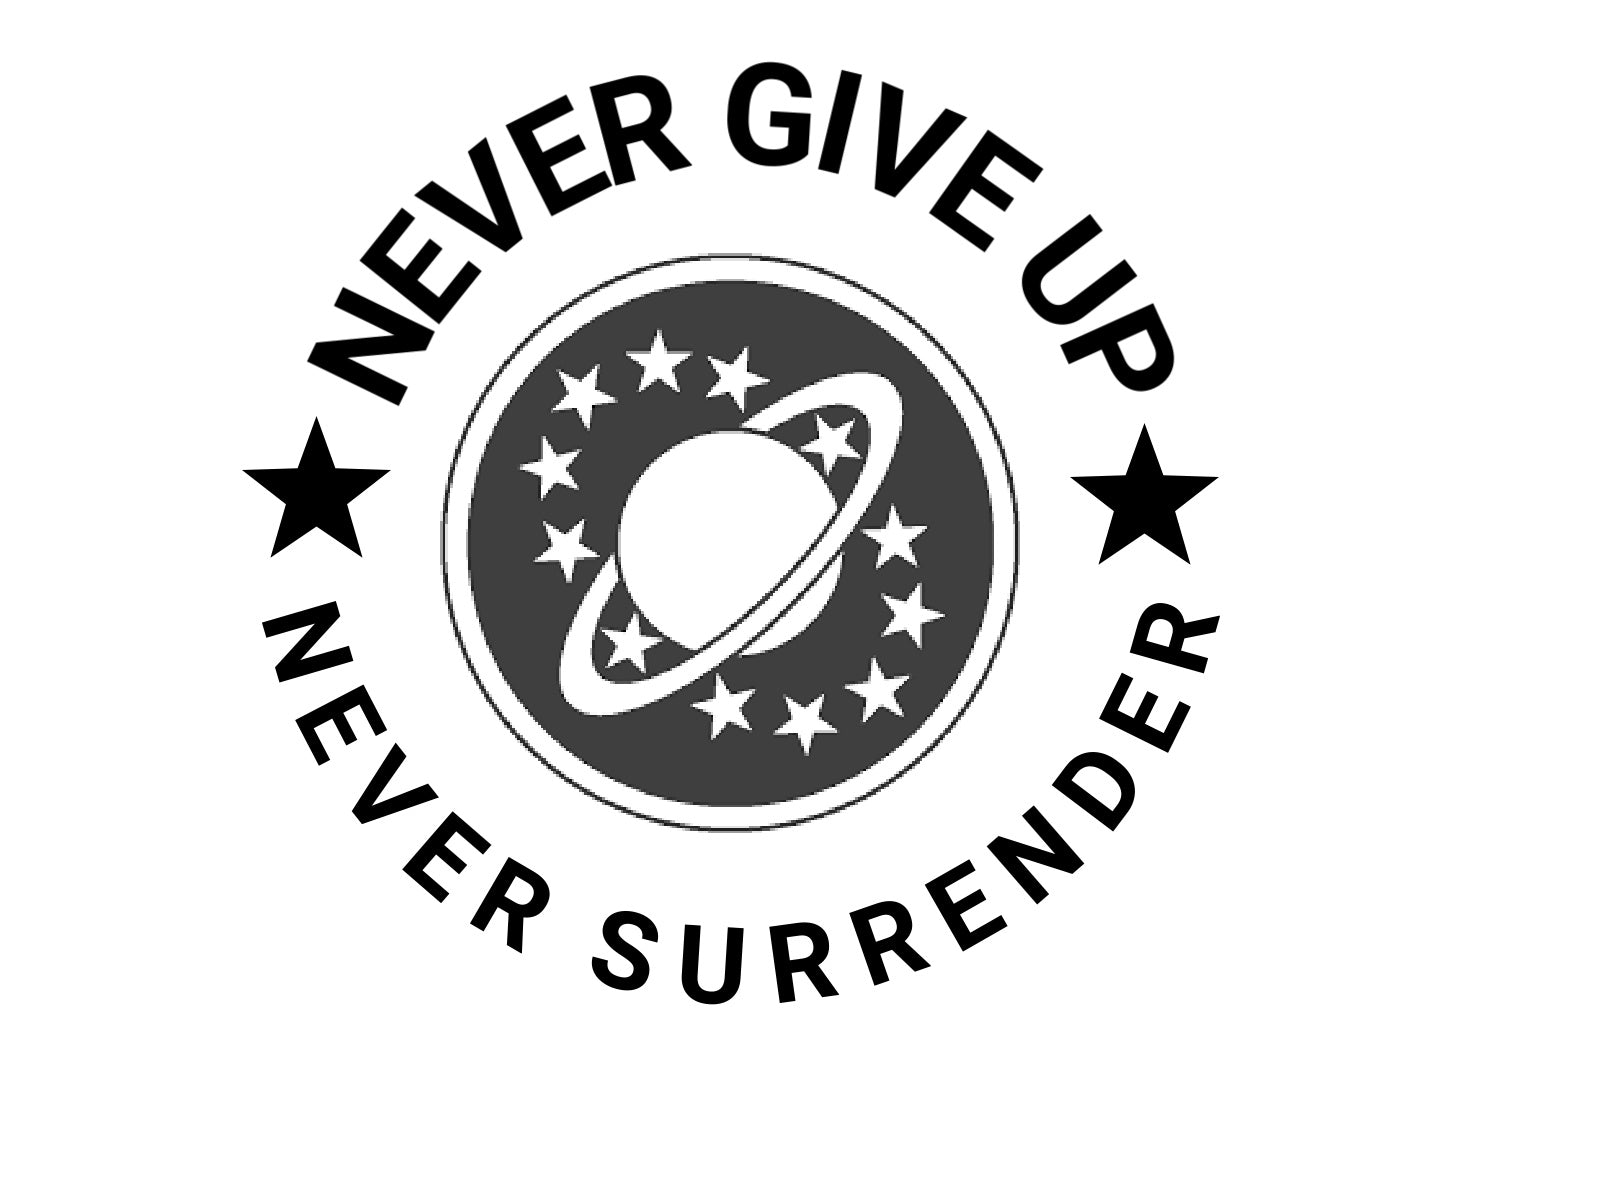 Never Give Up. Never Surrender.